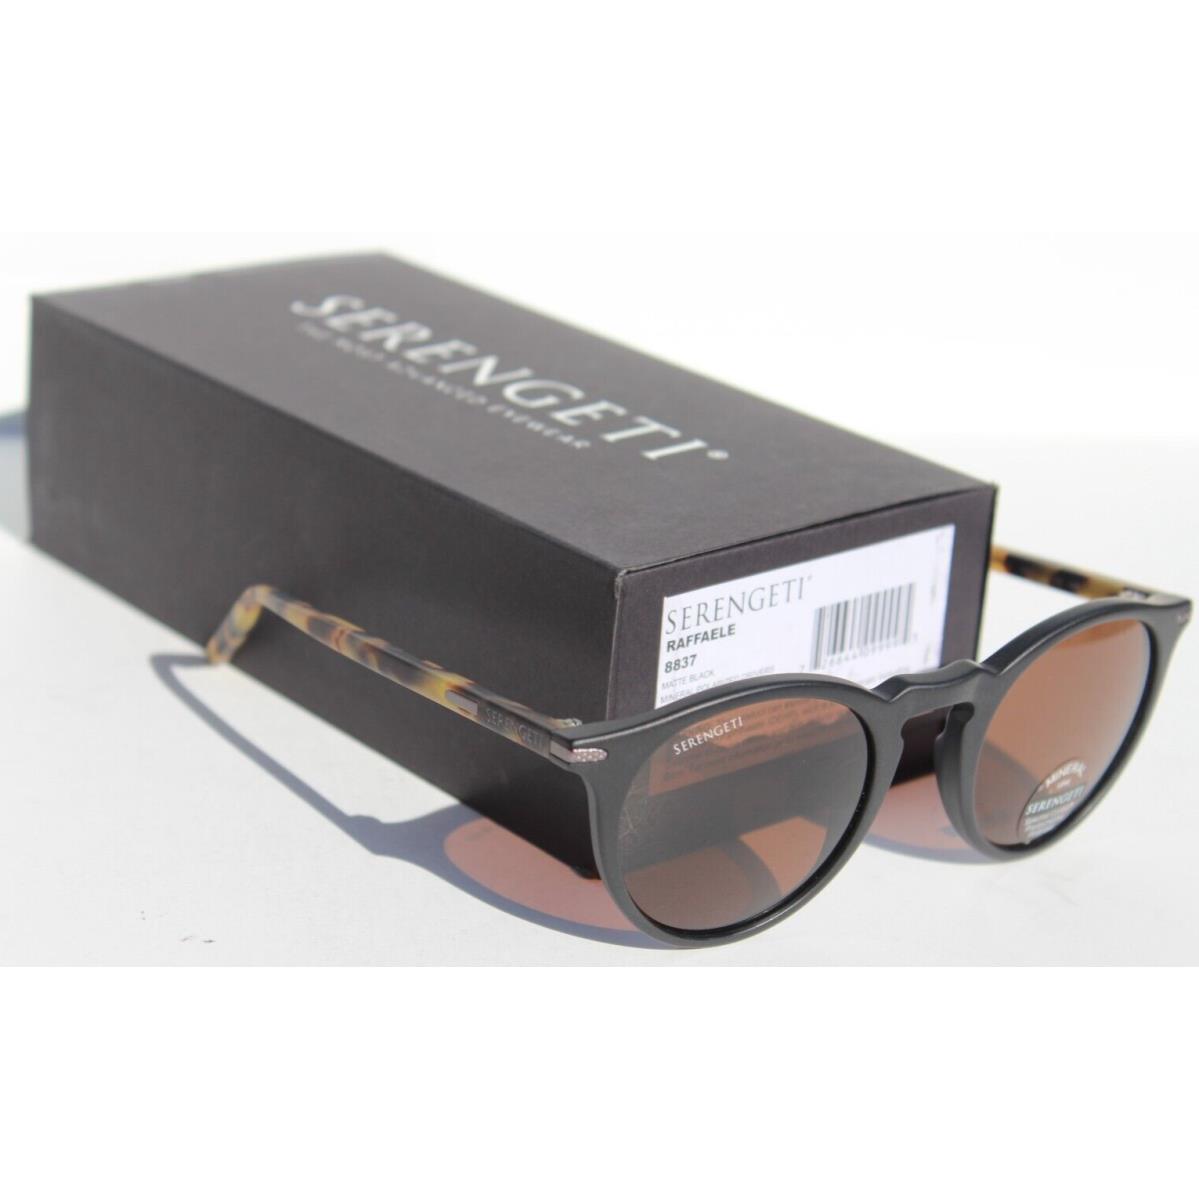 Serengeti Raffaele Polarized Sunglasses Matte Black/drivers 8837 Italy